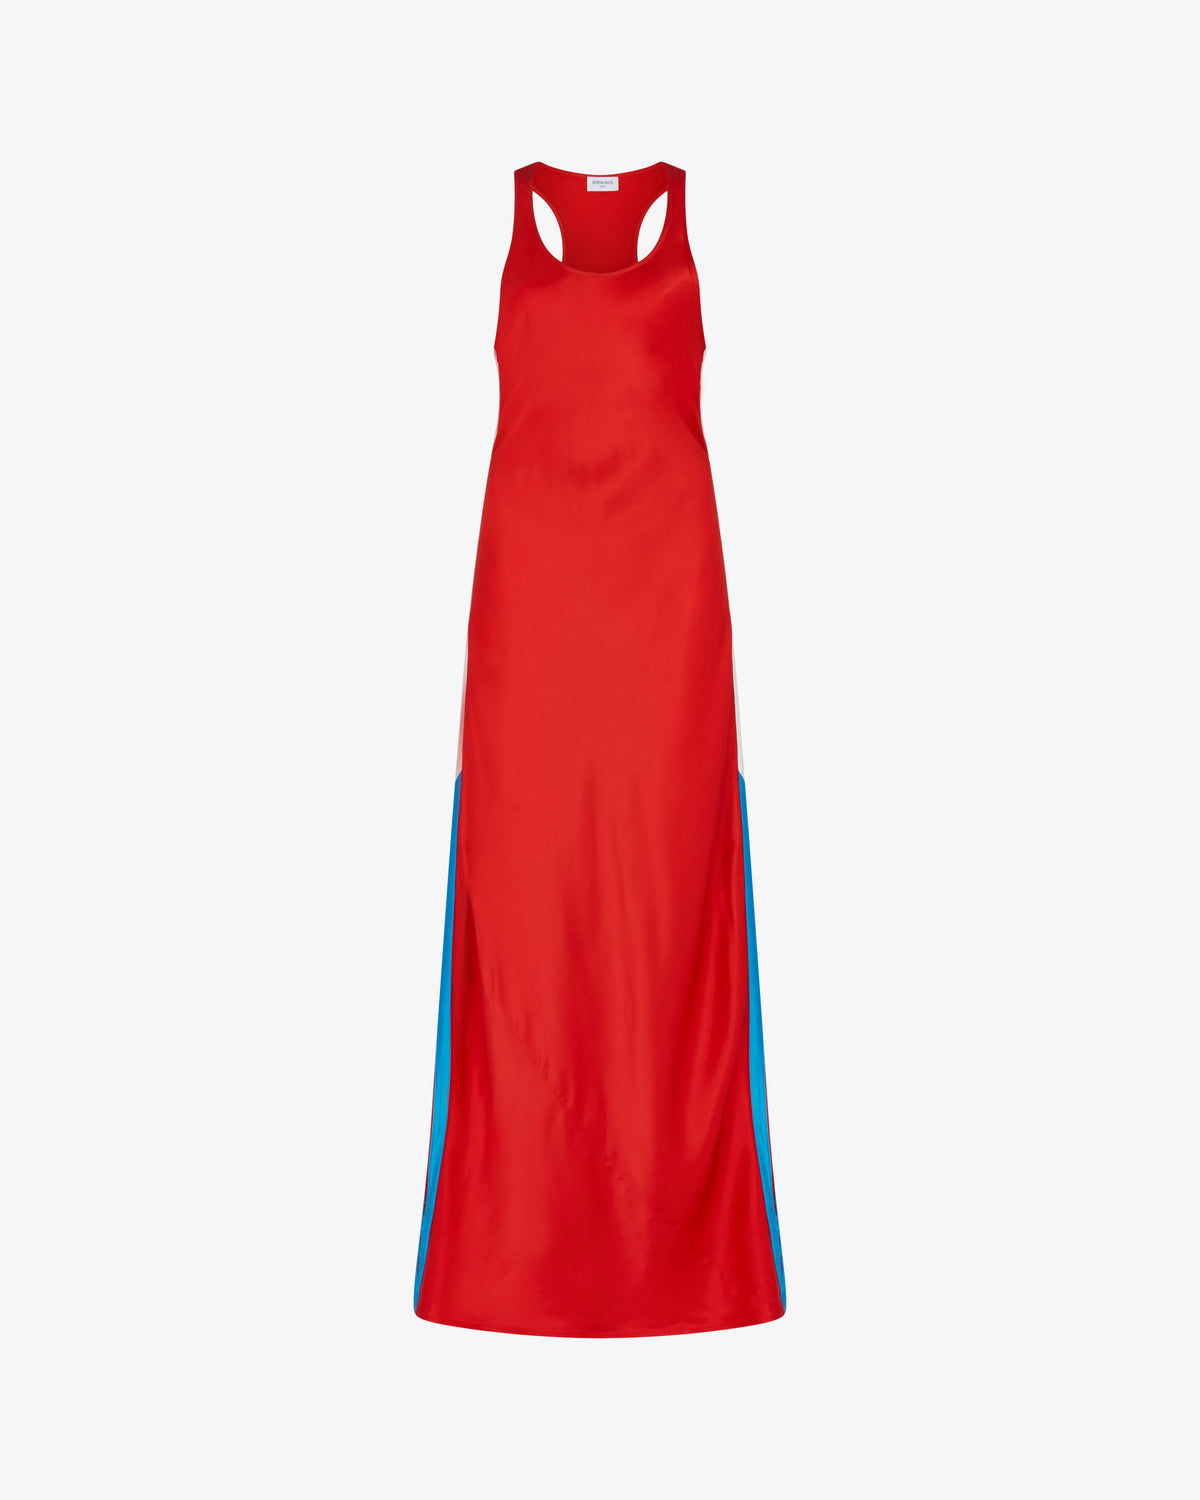 Satin Racer Tank Dress - Retro Red